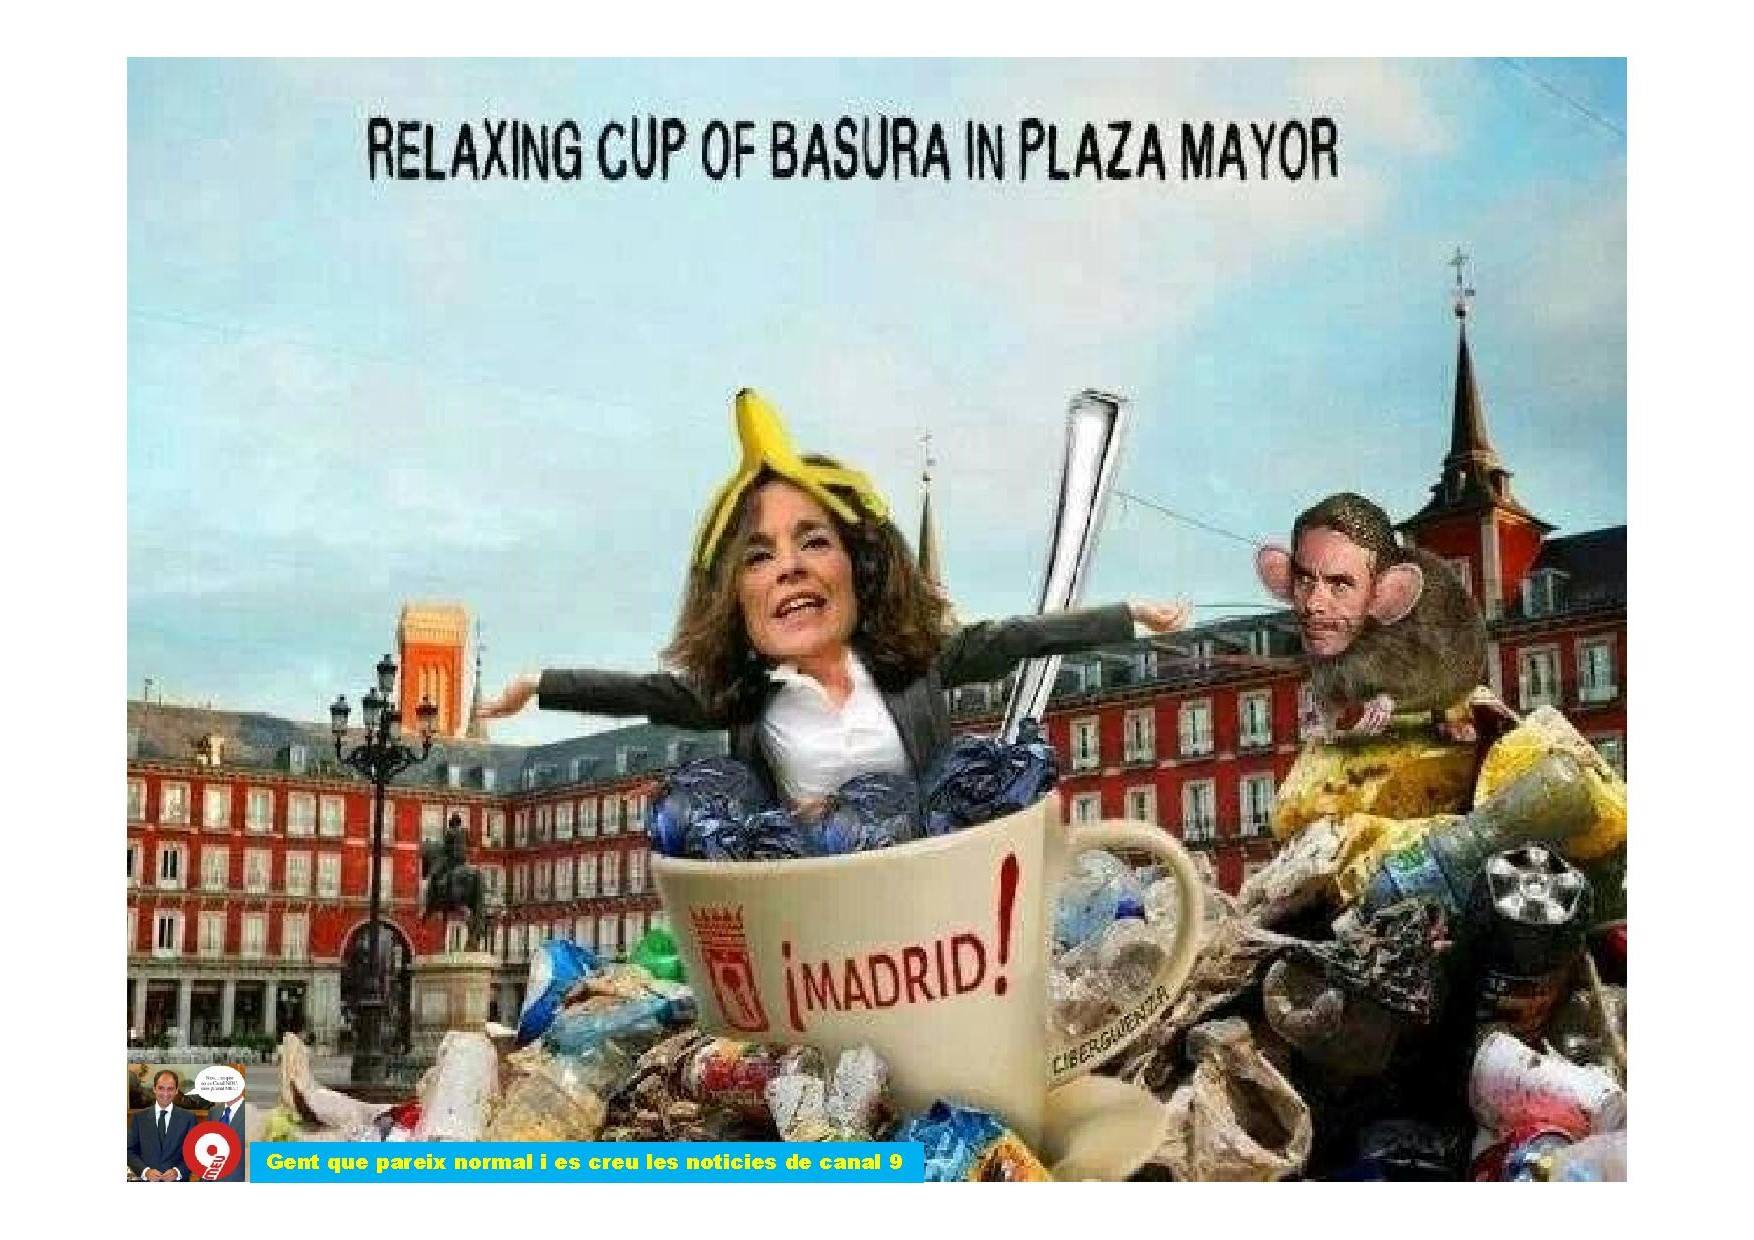 Relaxing cup of basura in Plaza Mayor